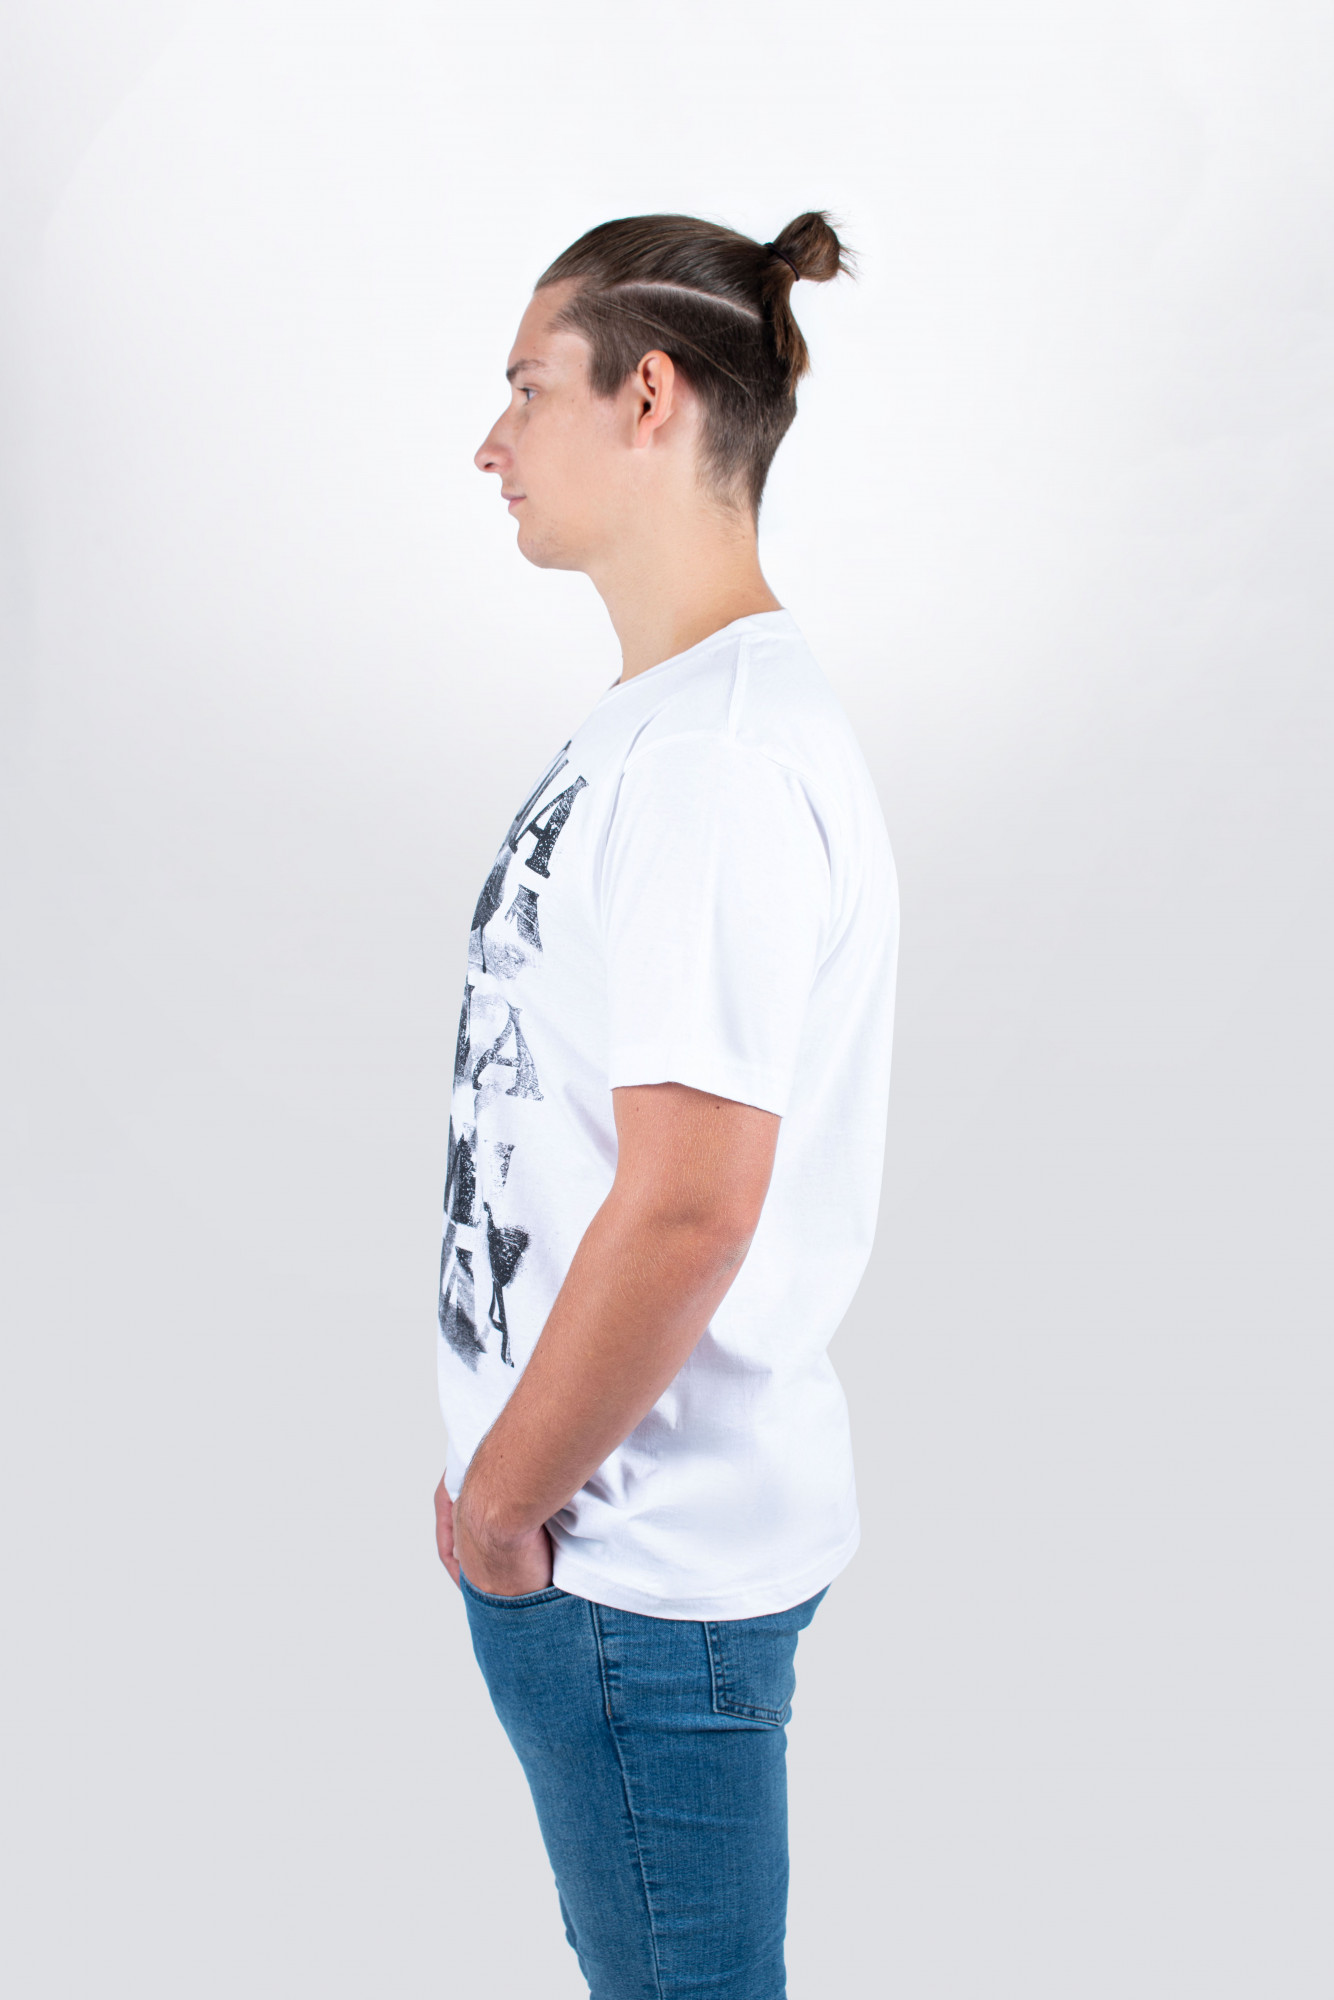 TAMA T-Shirt in weiß mit Spray Paint Frontprint (TT10GHET) | SALE | MEINL  Shop | T-Shirts